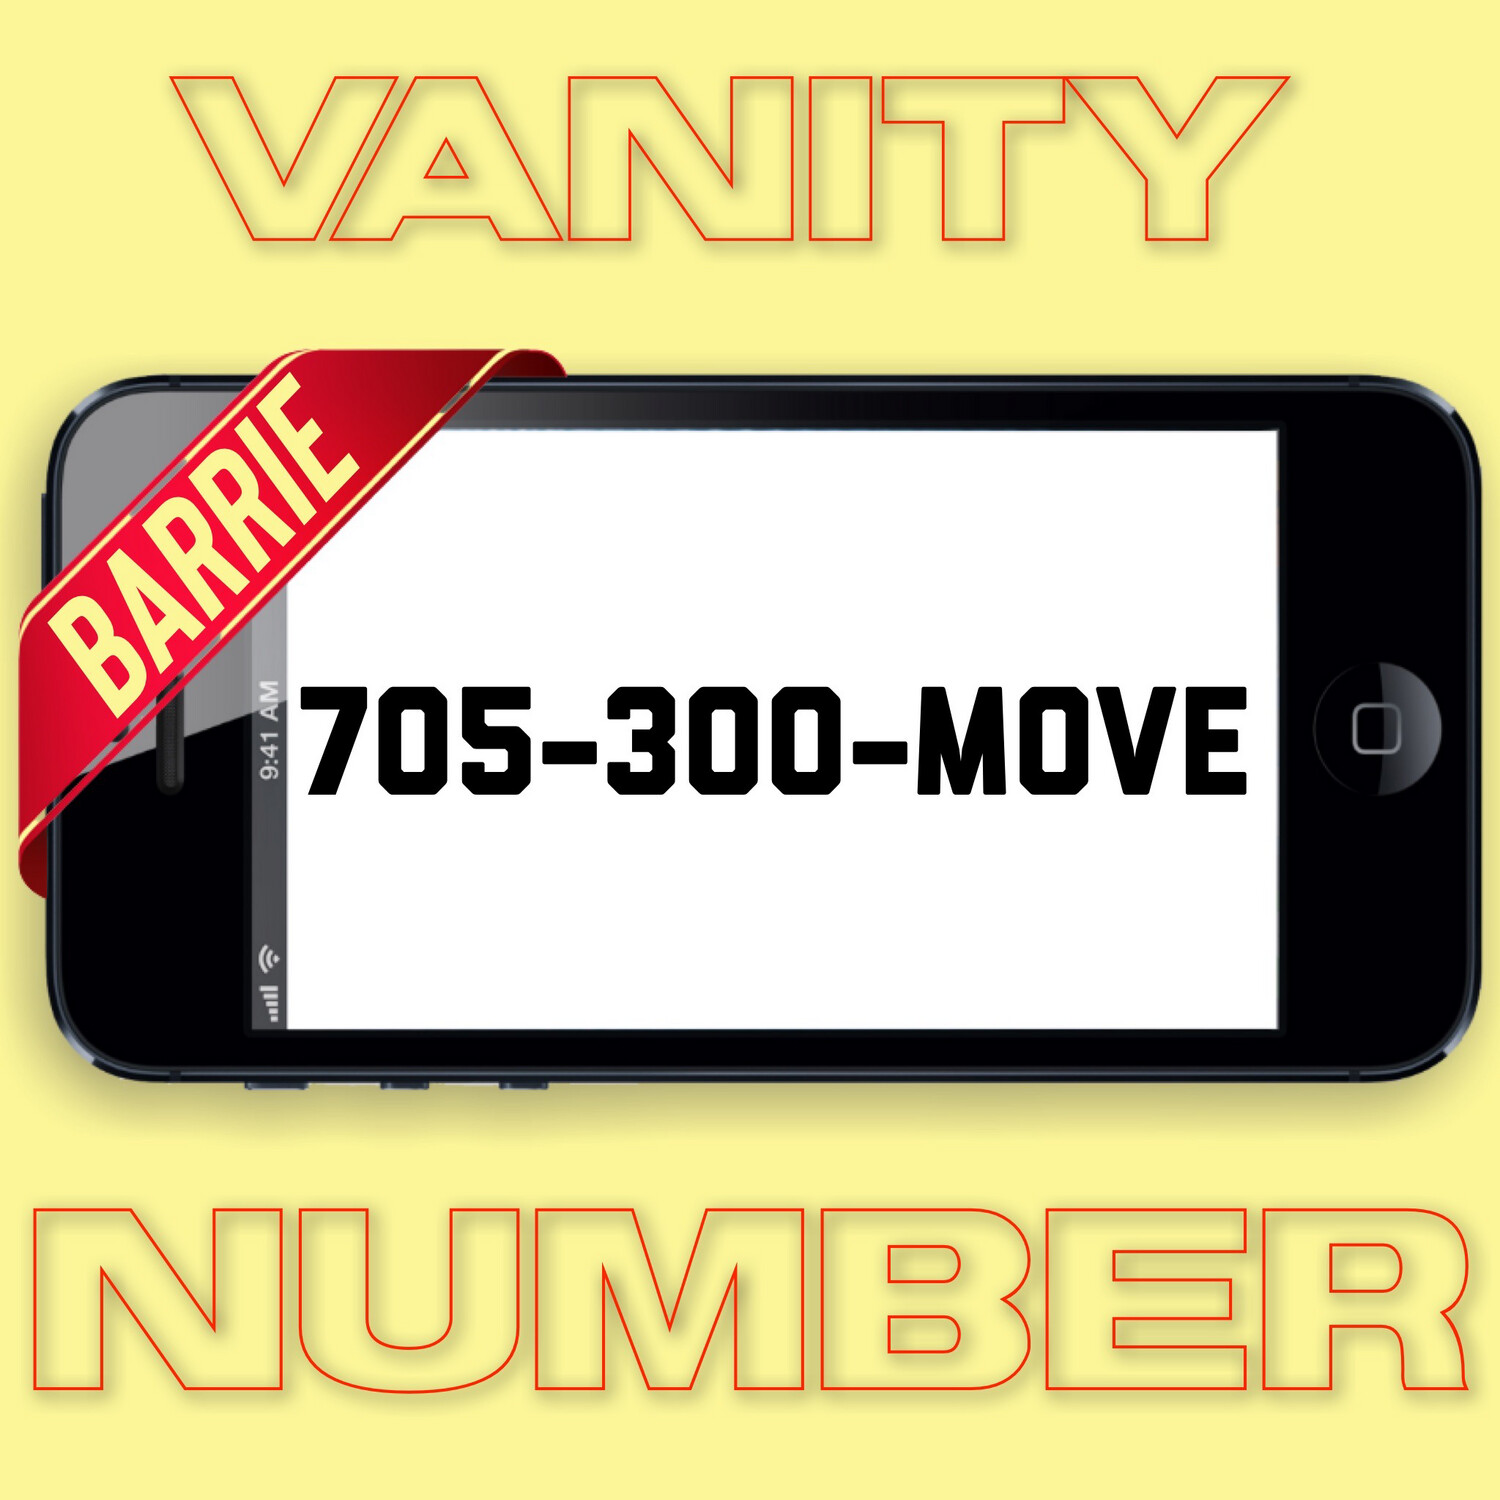 705-300-MOVE VANITY NUMBER BARRIE